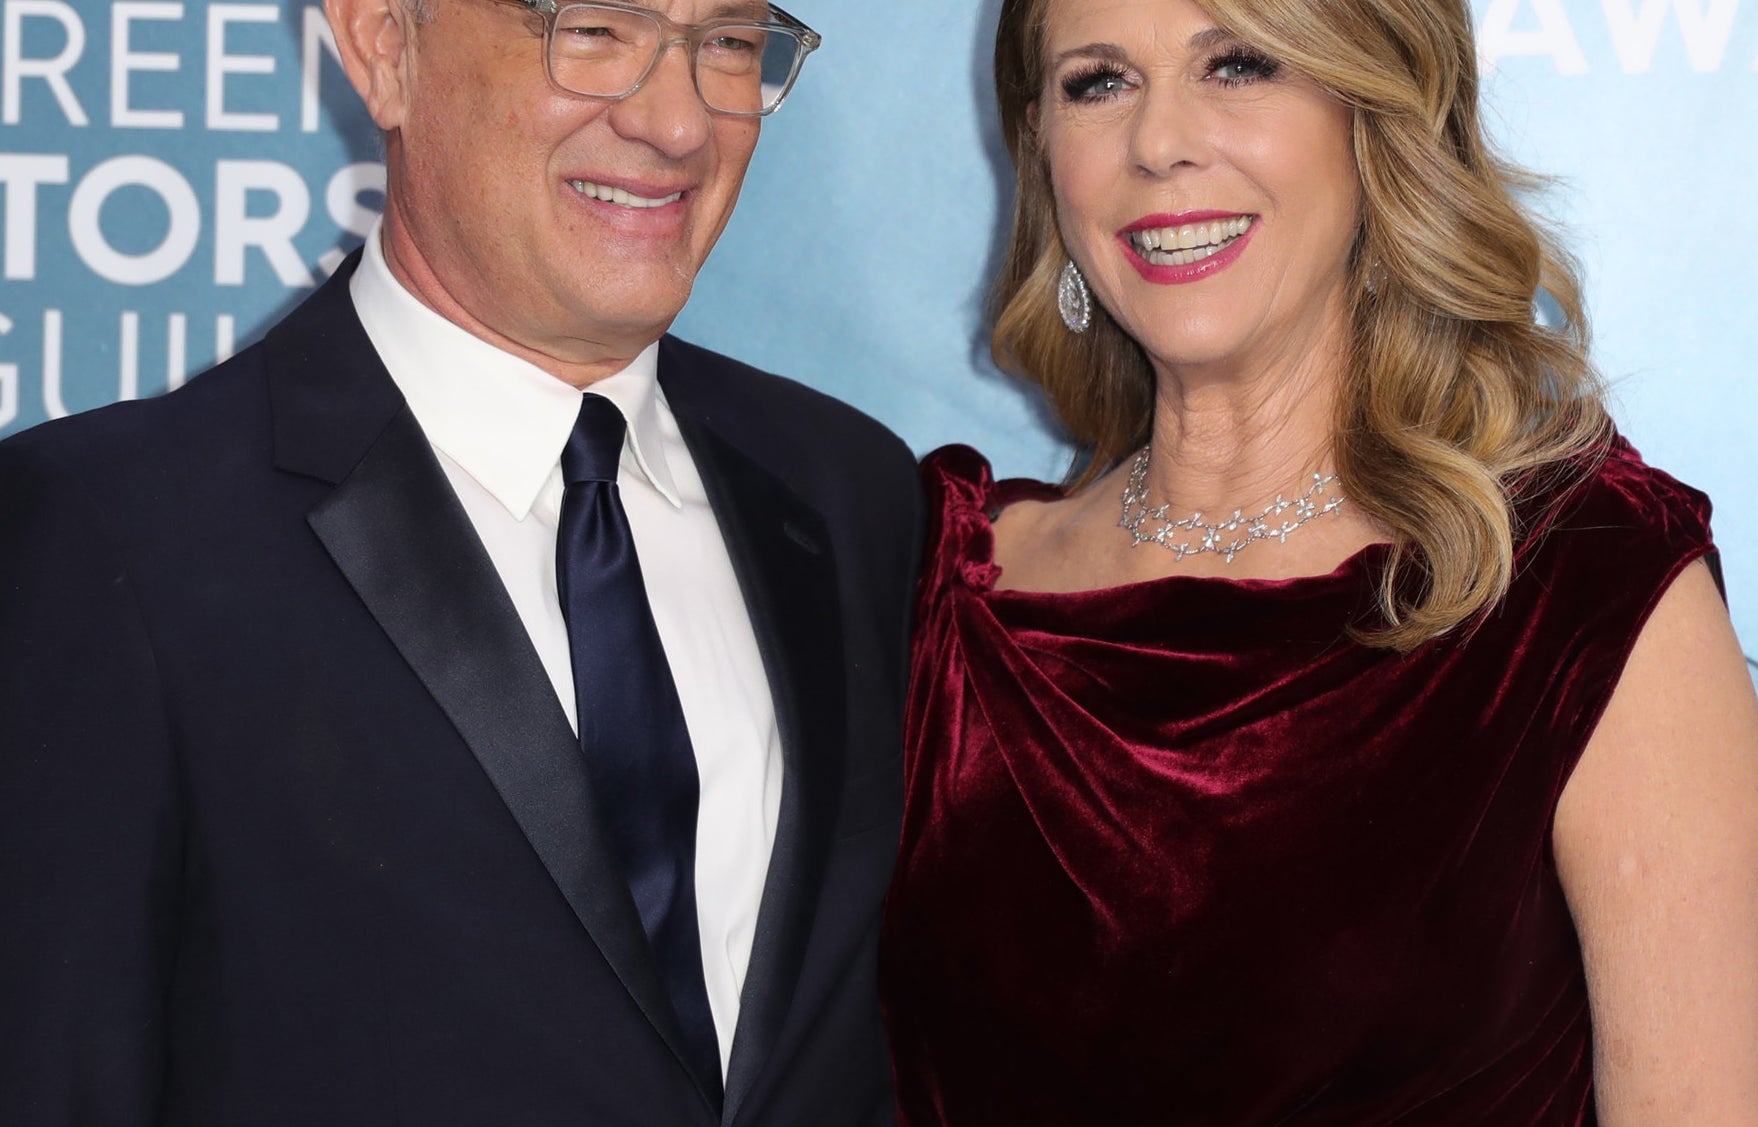 Tom Hanks and Rita Wilson smiling together